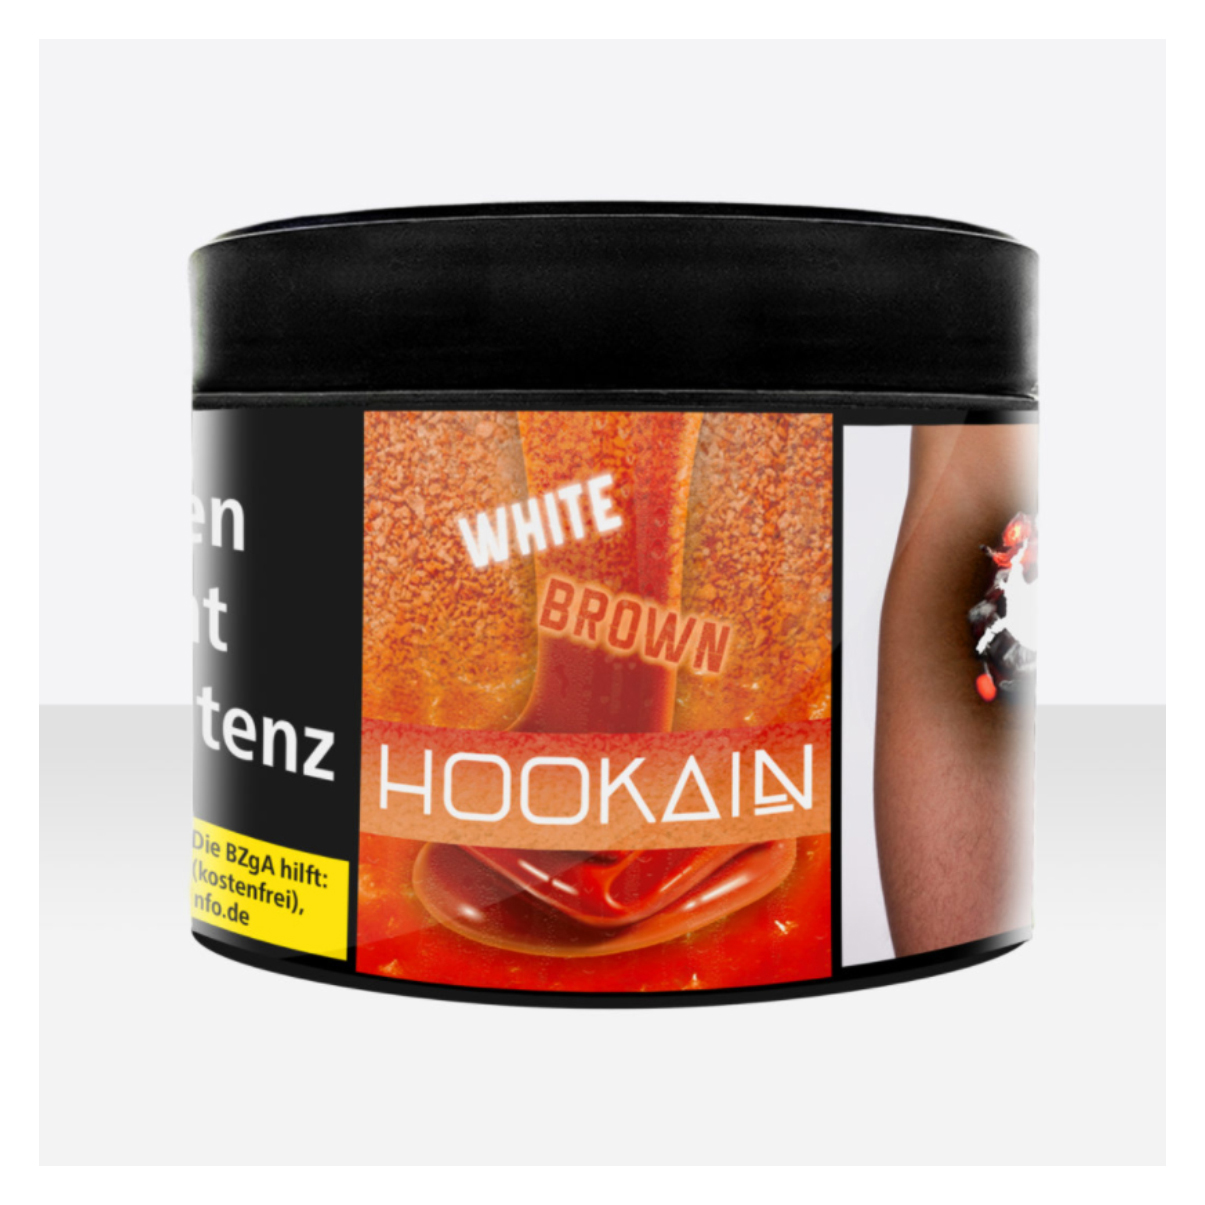 WHITE BROWN | Hookain